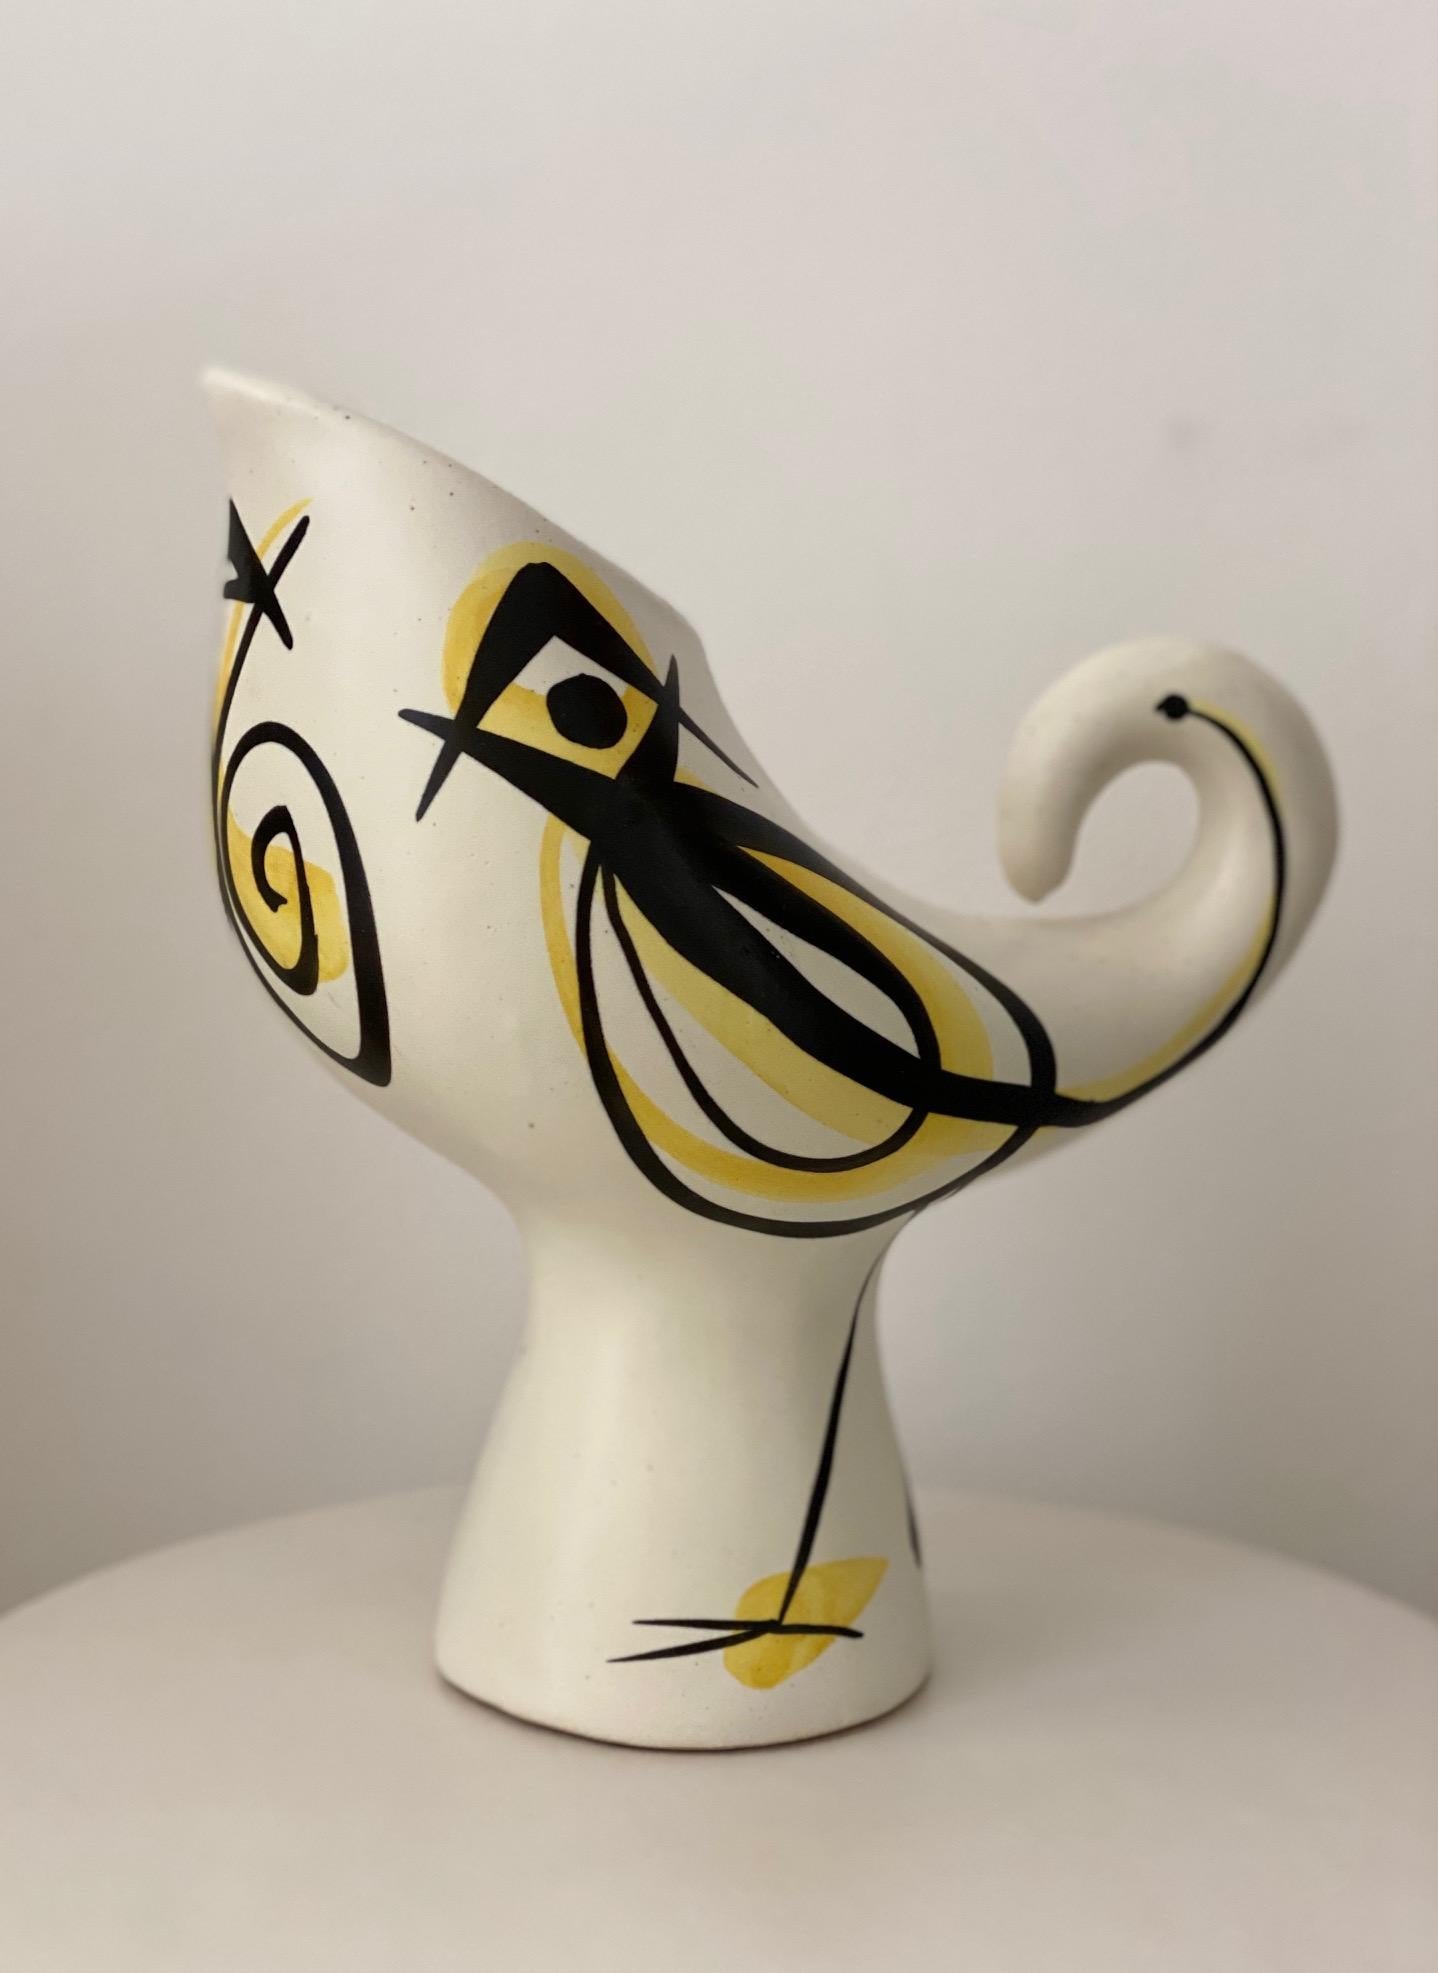 Roger Capron (1922-2006)
Stylized Bird vase signed Capron Vallauris circa 1950
Measures: H 22 cm x L 20 cm.